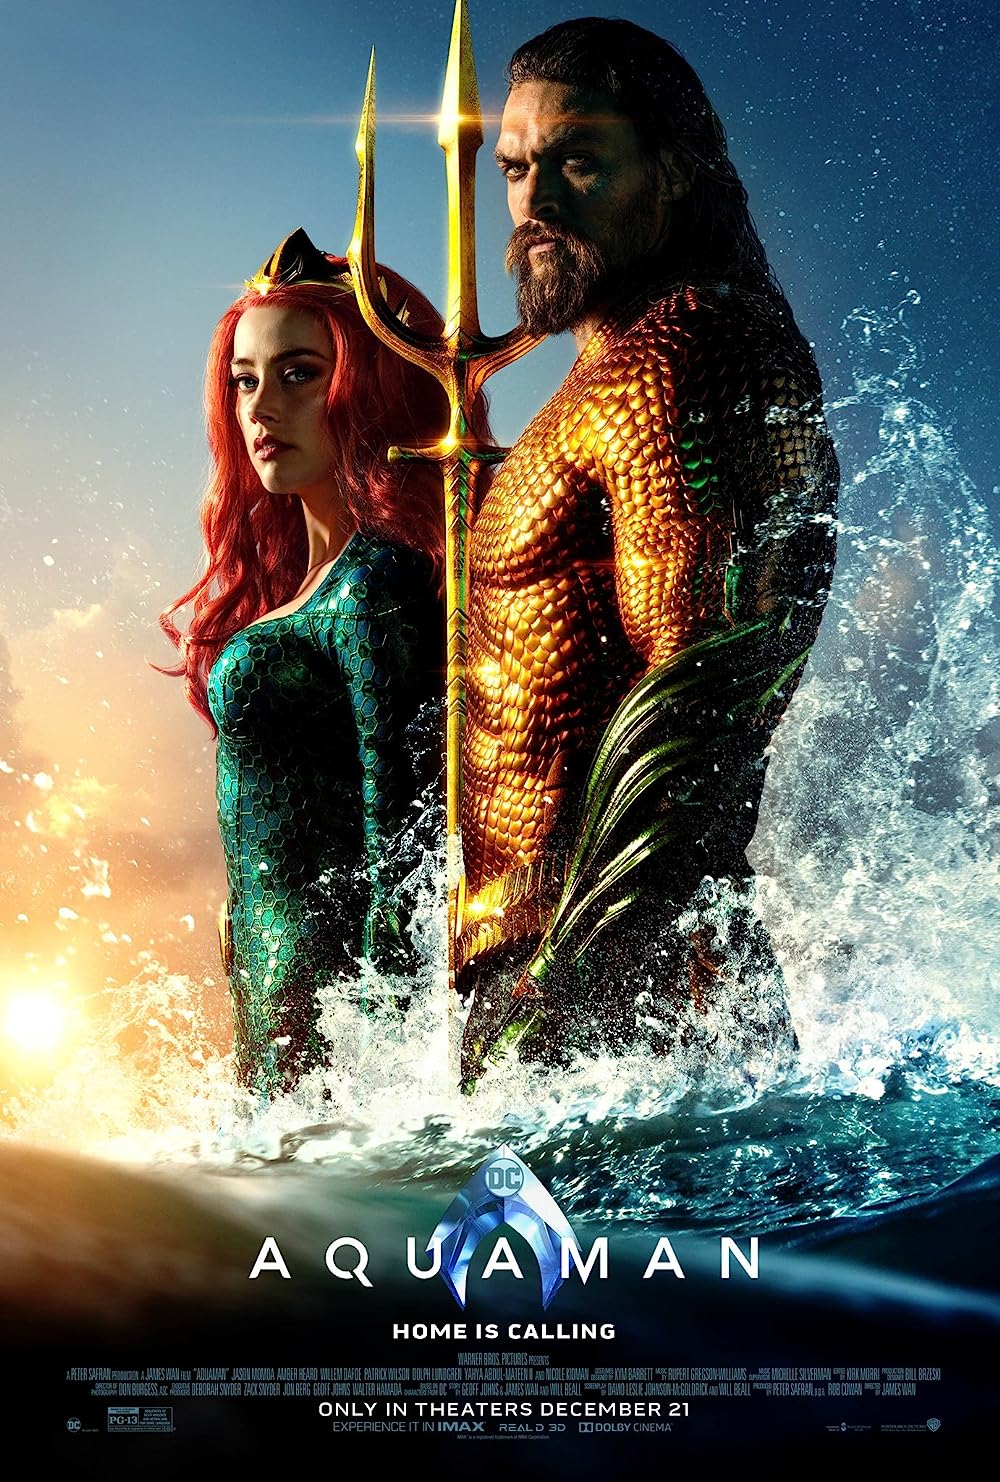 Aquaman - DCEU Movies in order